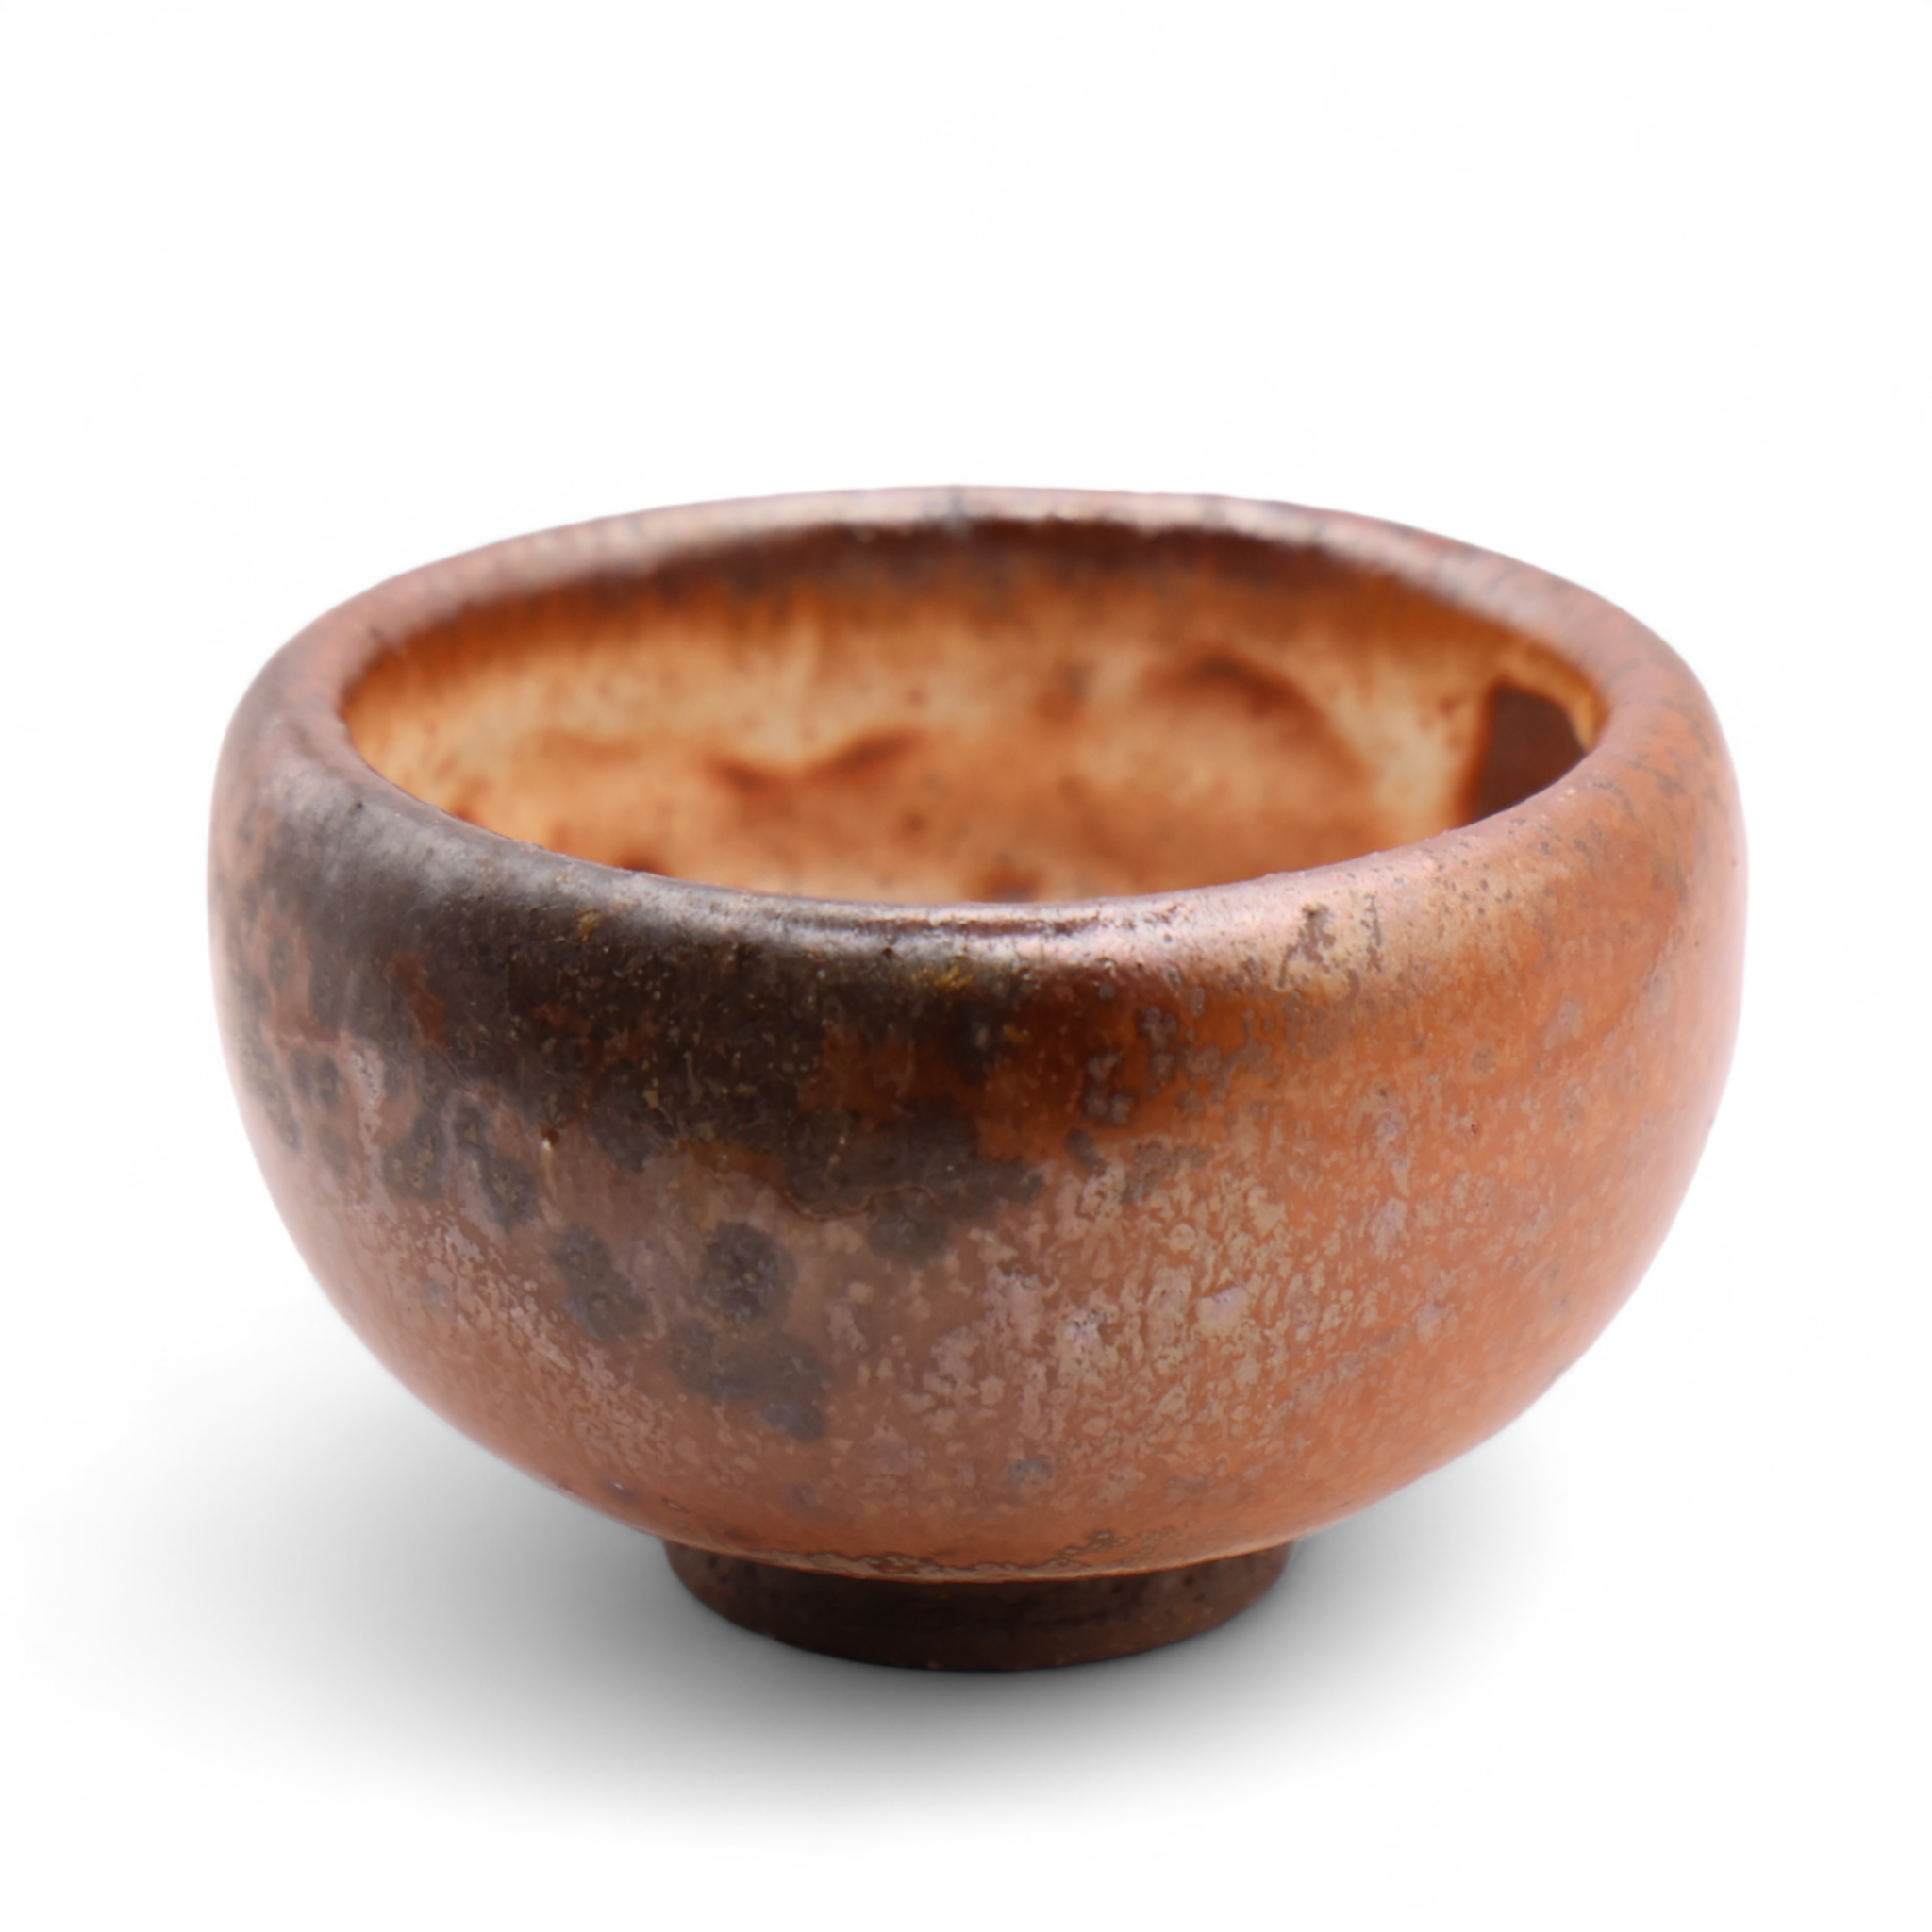 Taiwanese Handmade Wood-Fired Ceramic Teacup - Amber Eclipse